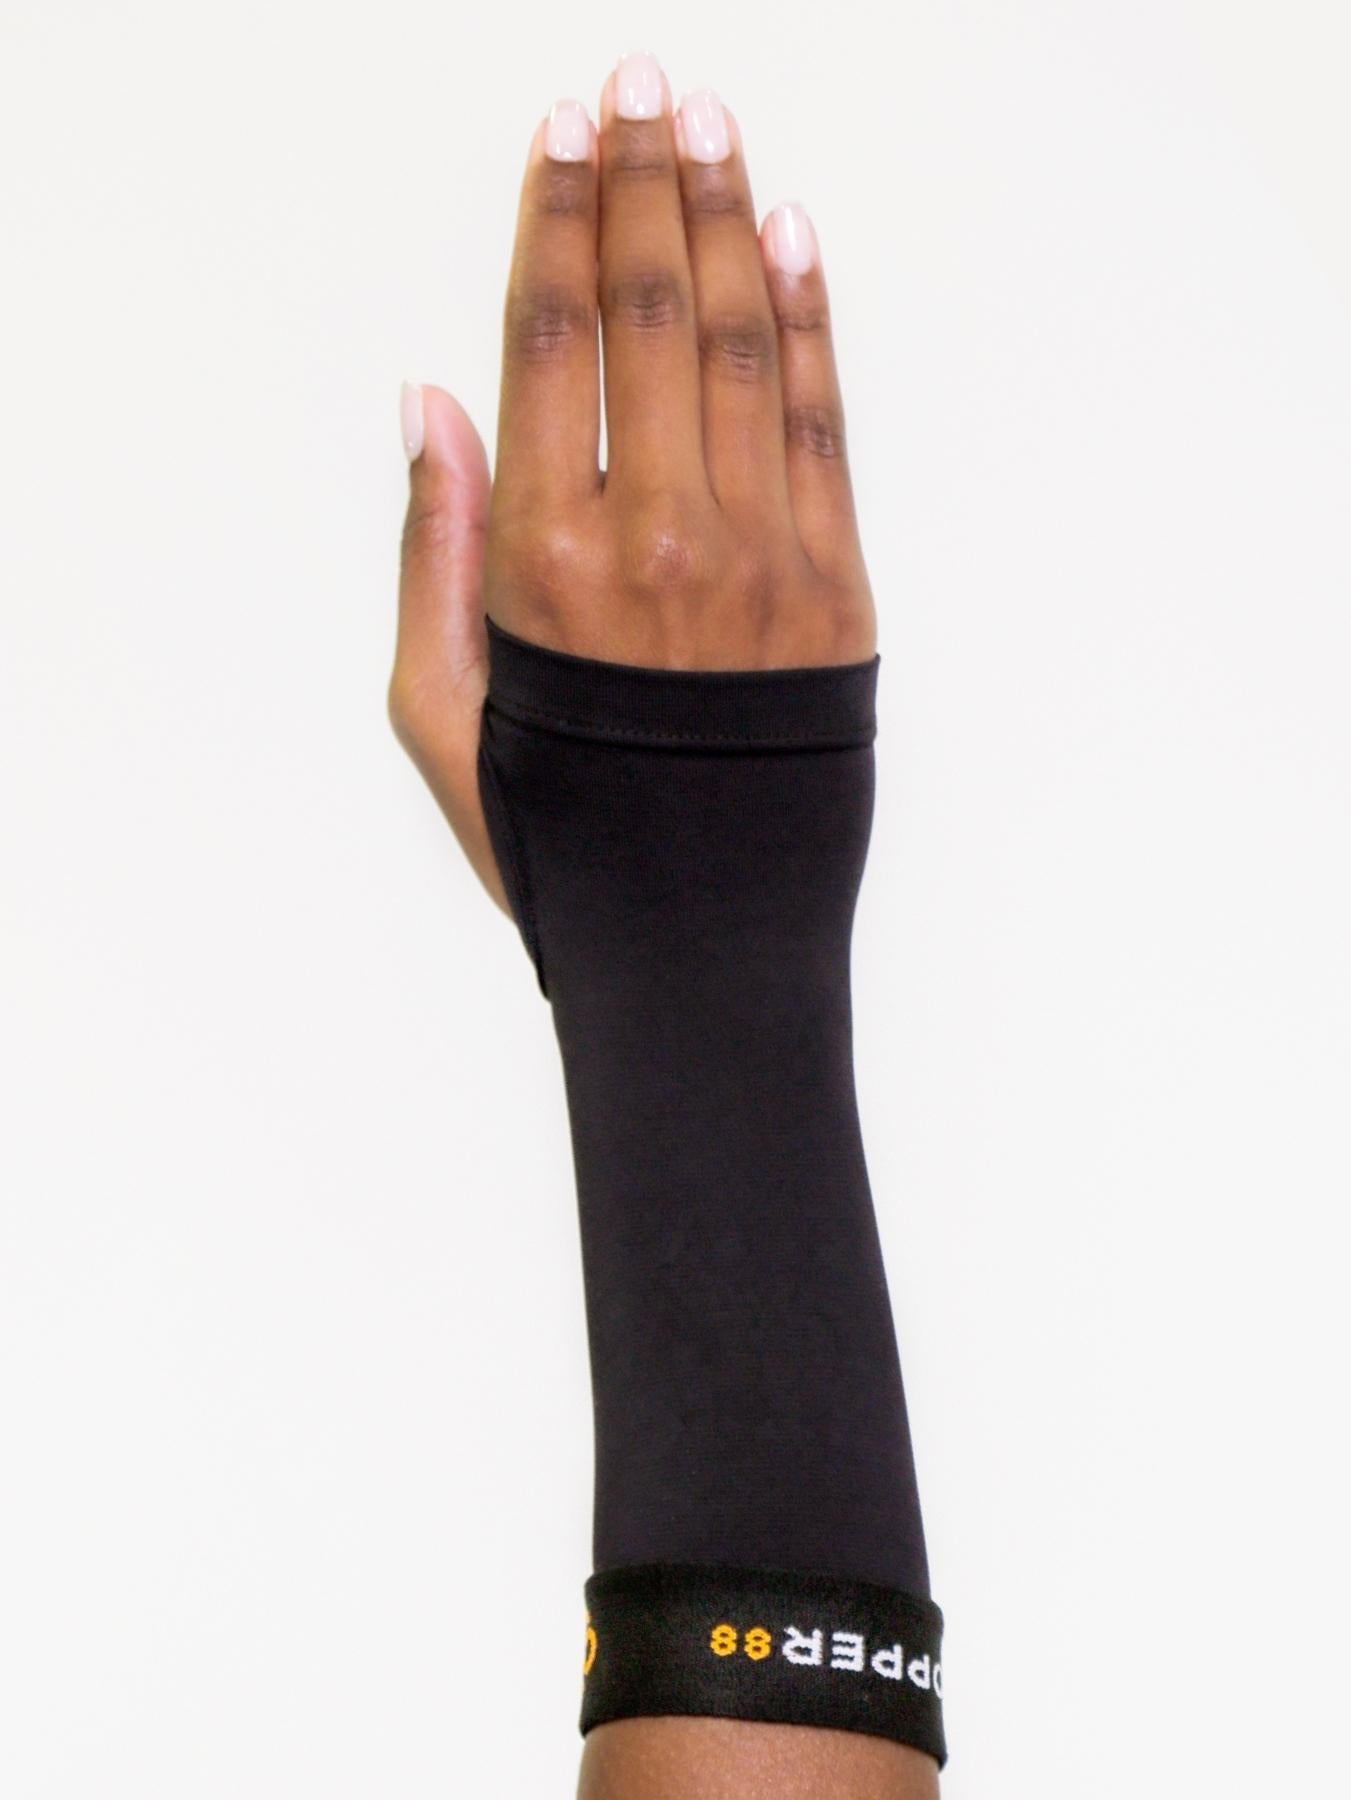 Copper Compression Wrist/Hand Sleeve - Unisex